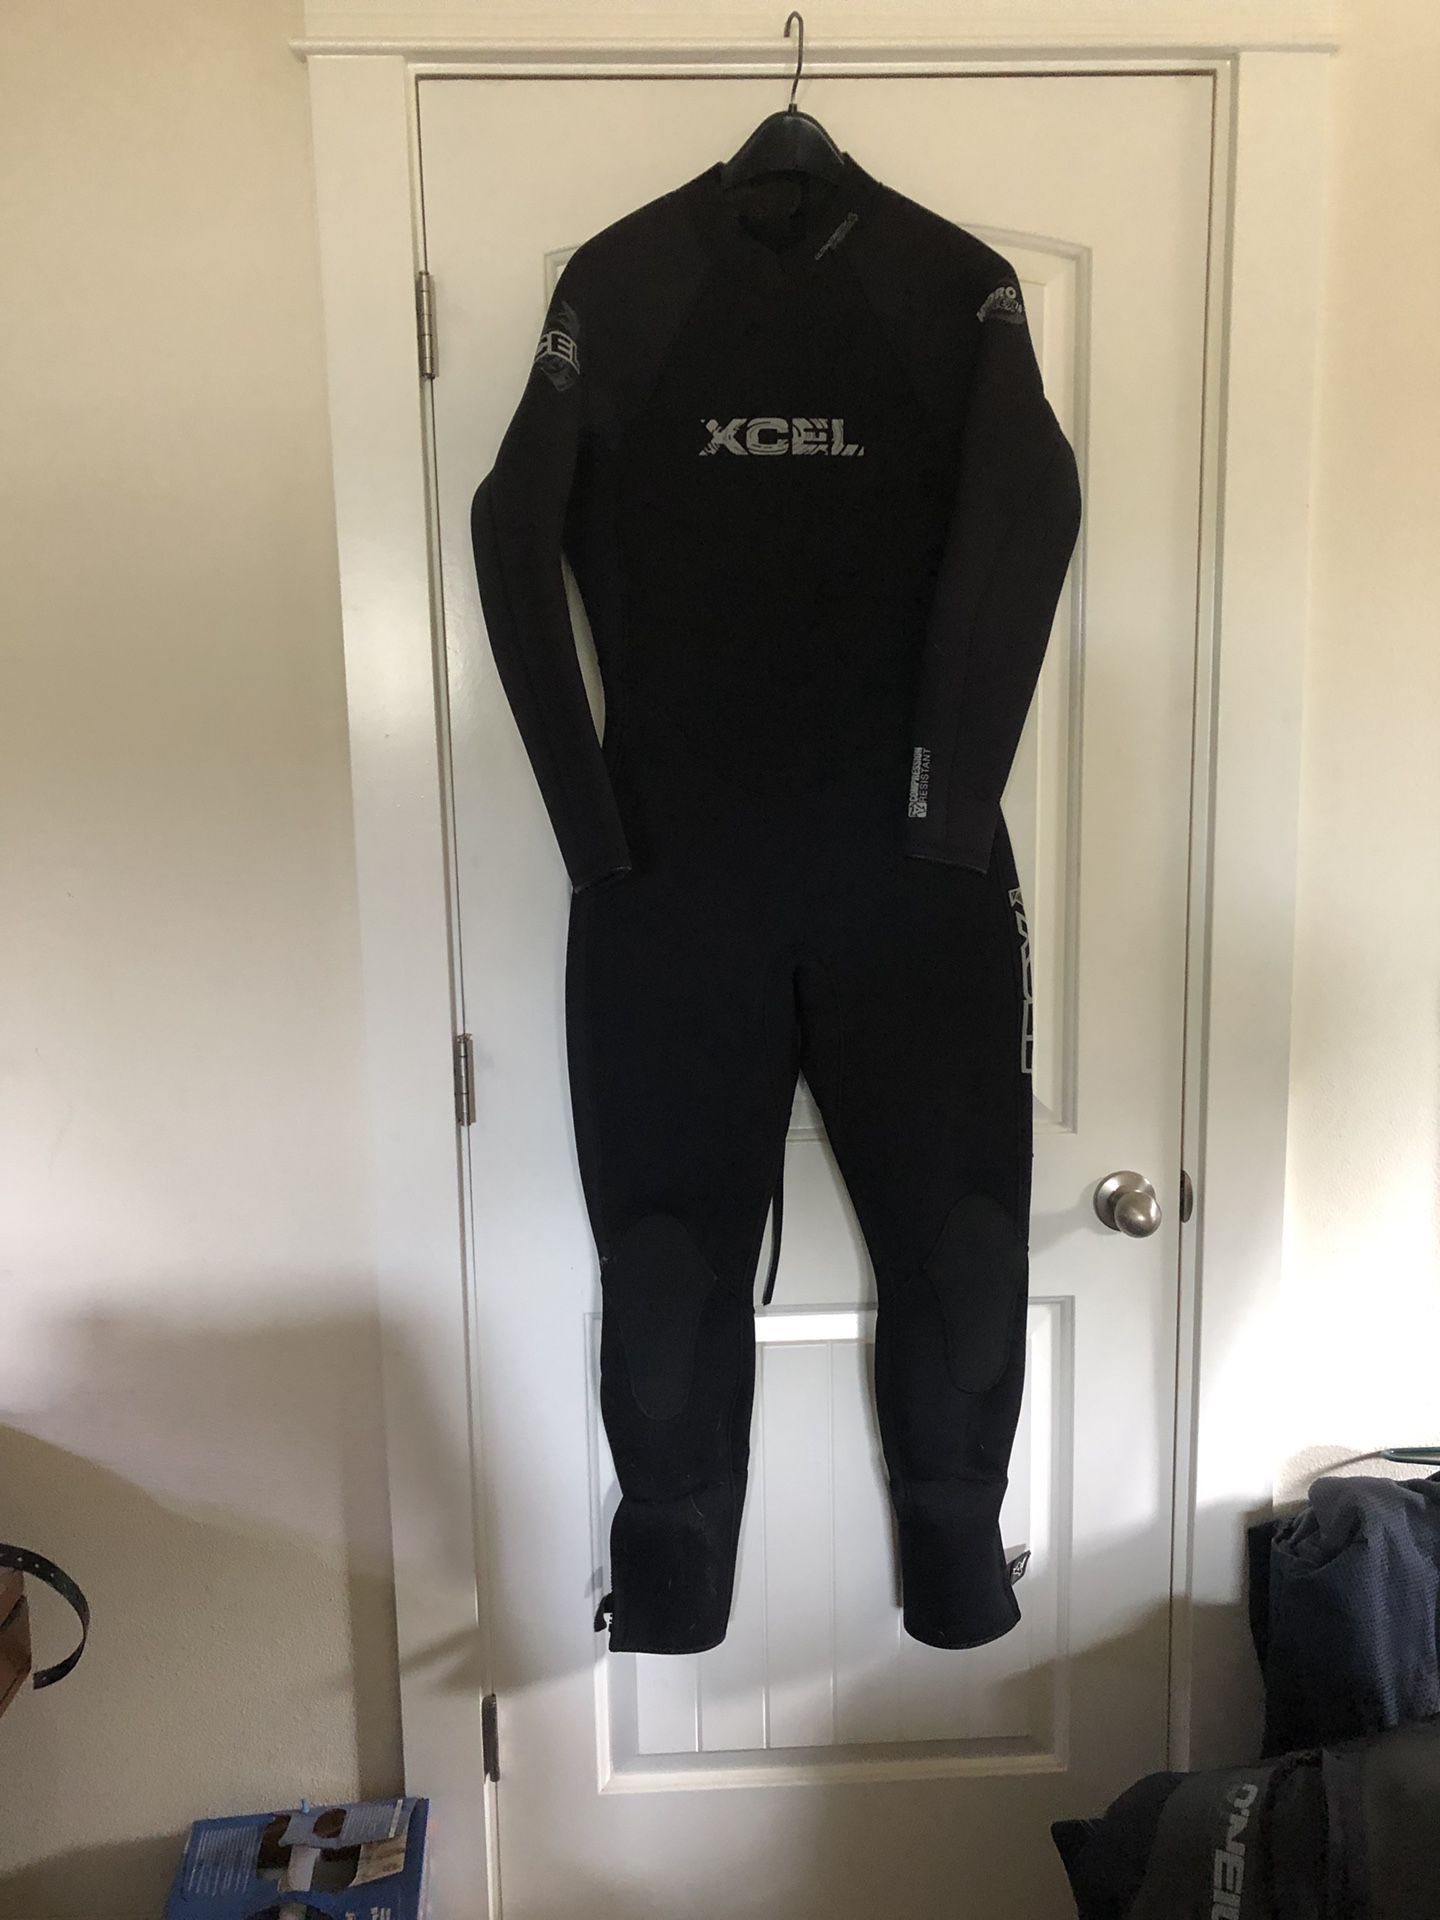 Men’s size medium Xcel wetsuit